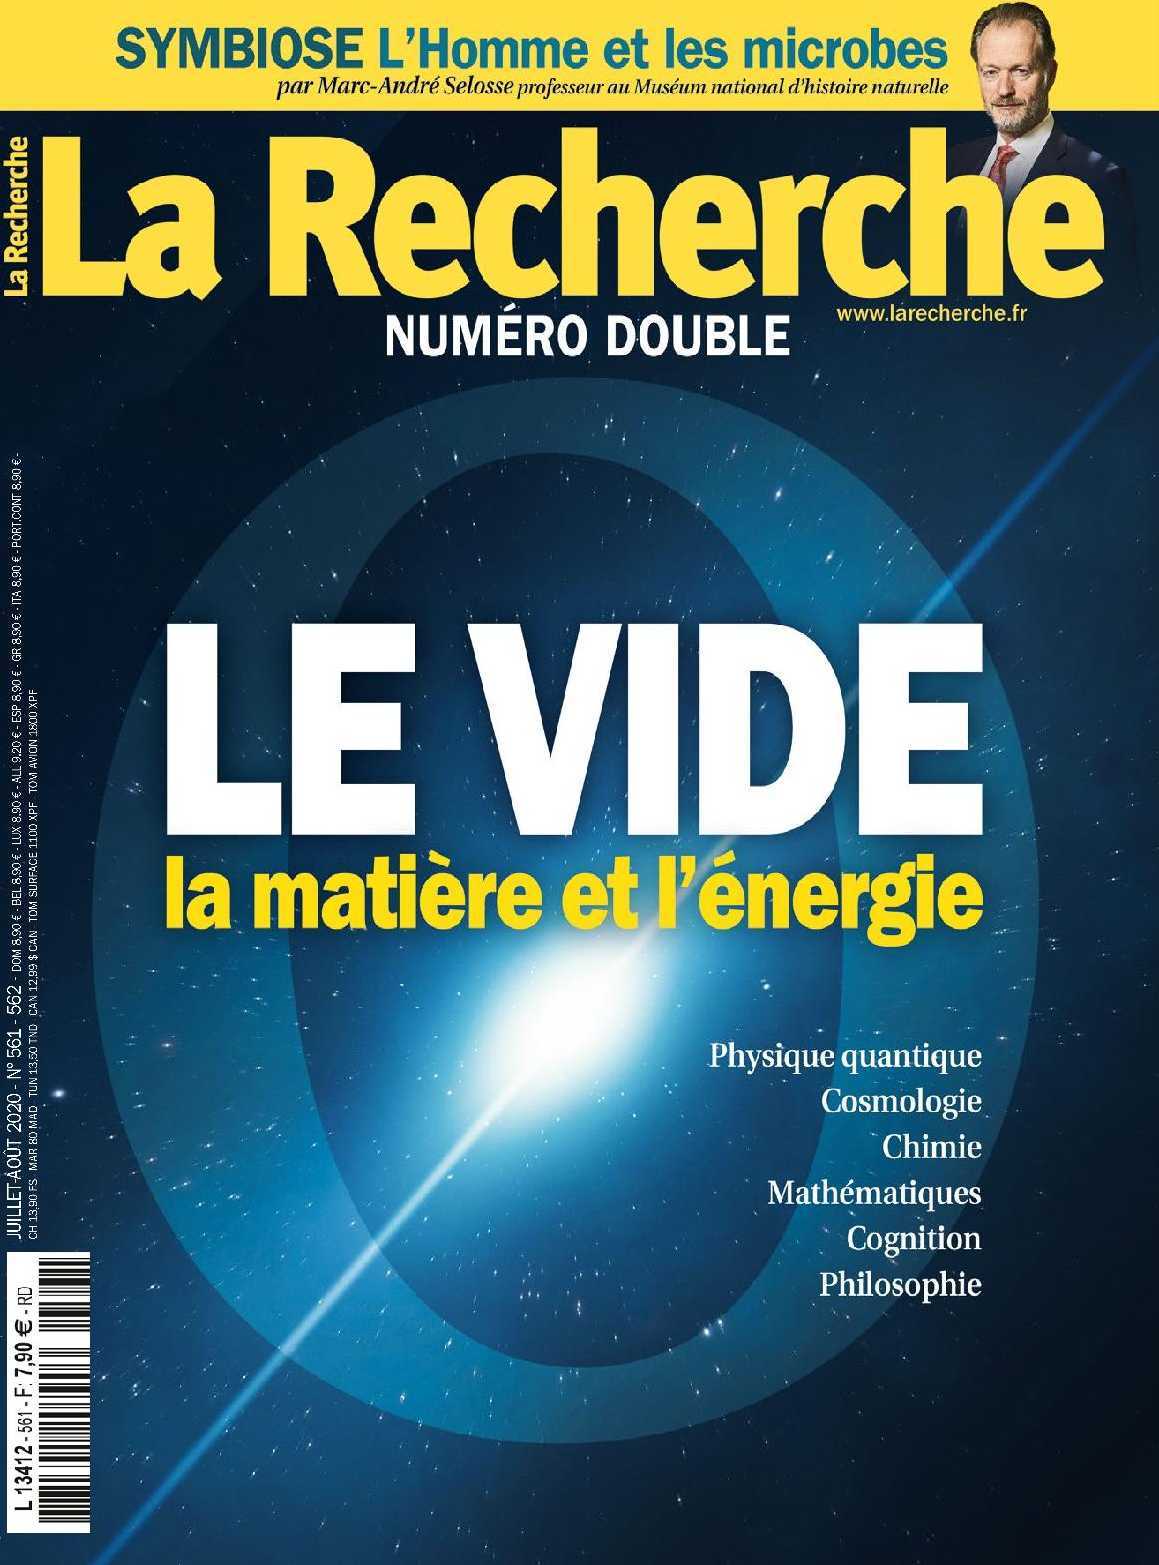 Book La Recherche N°561/562- jjuillet/août 2020 